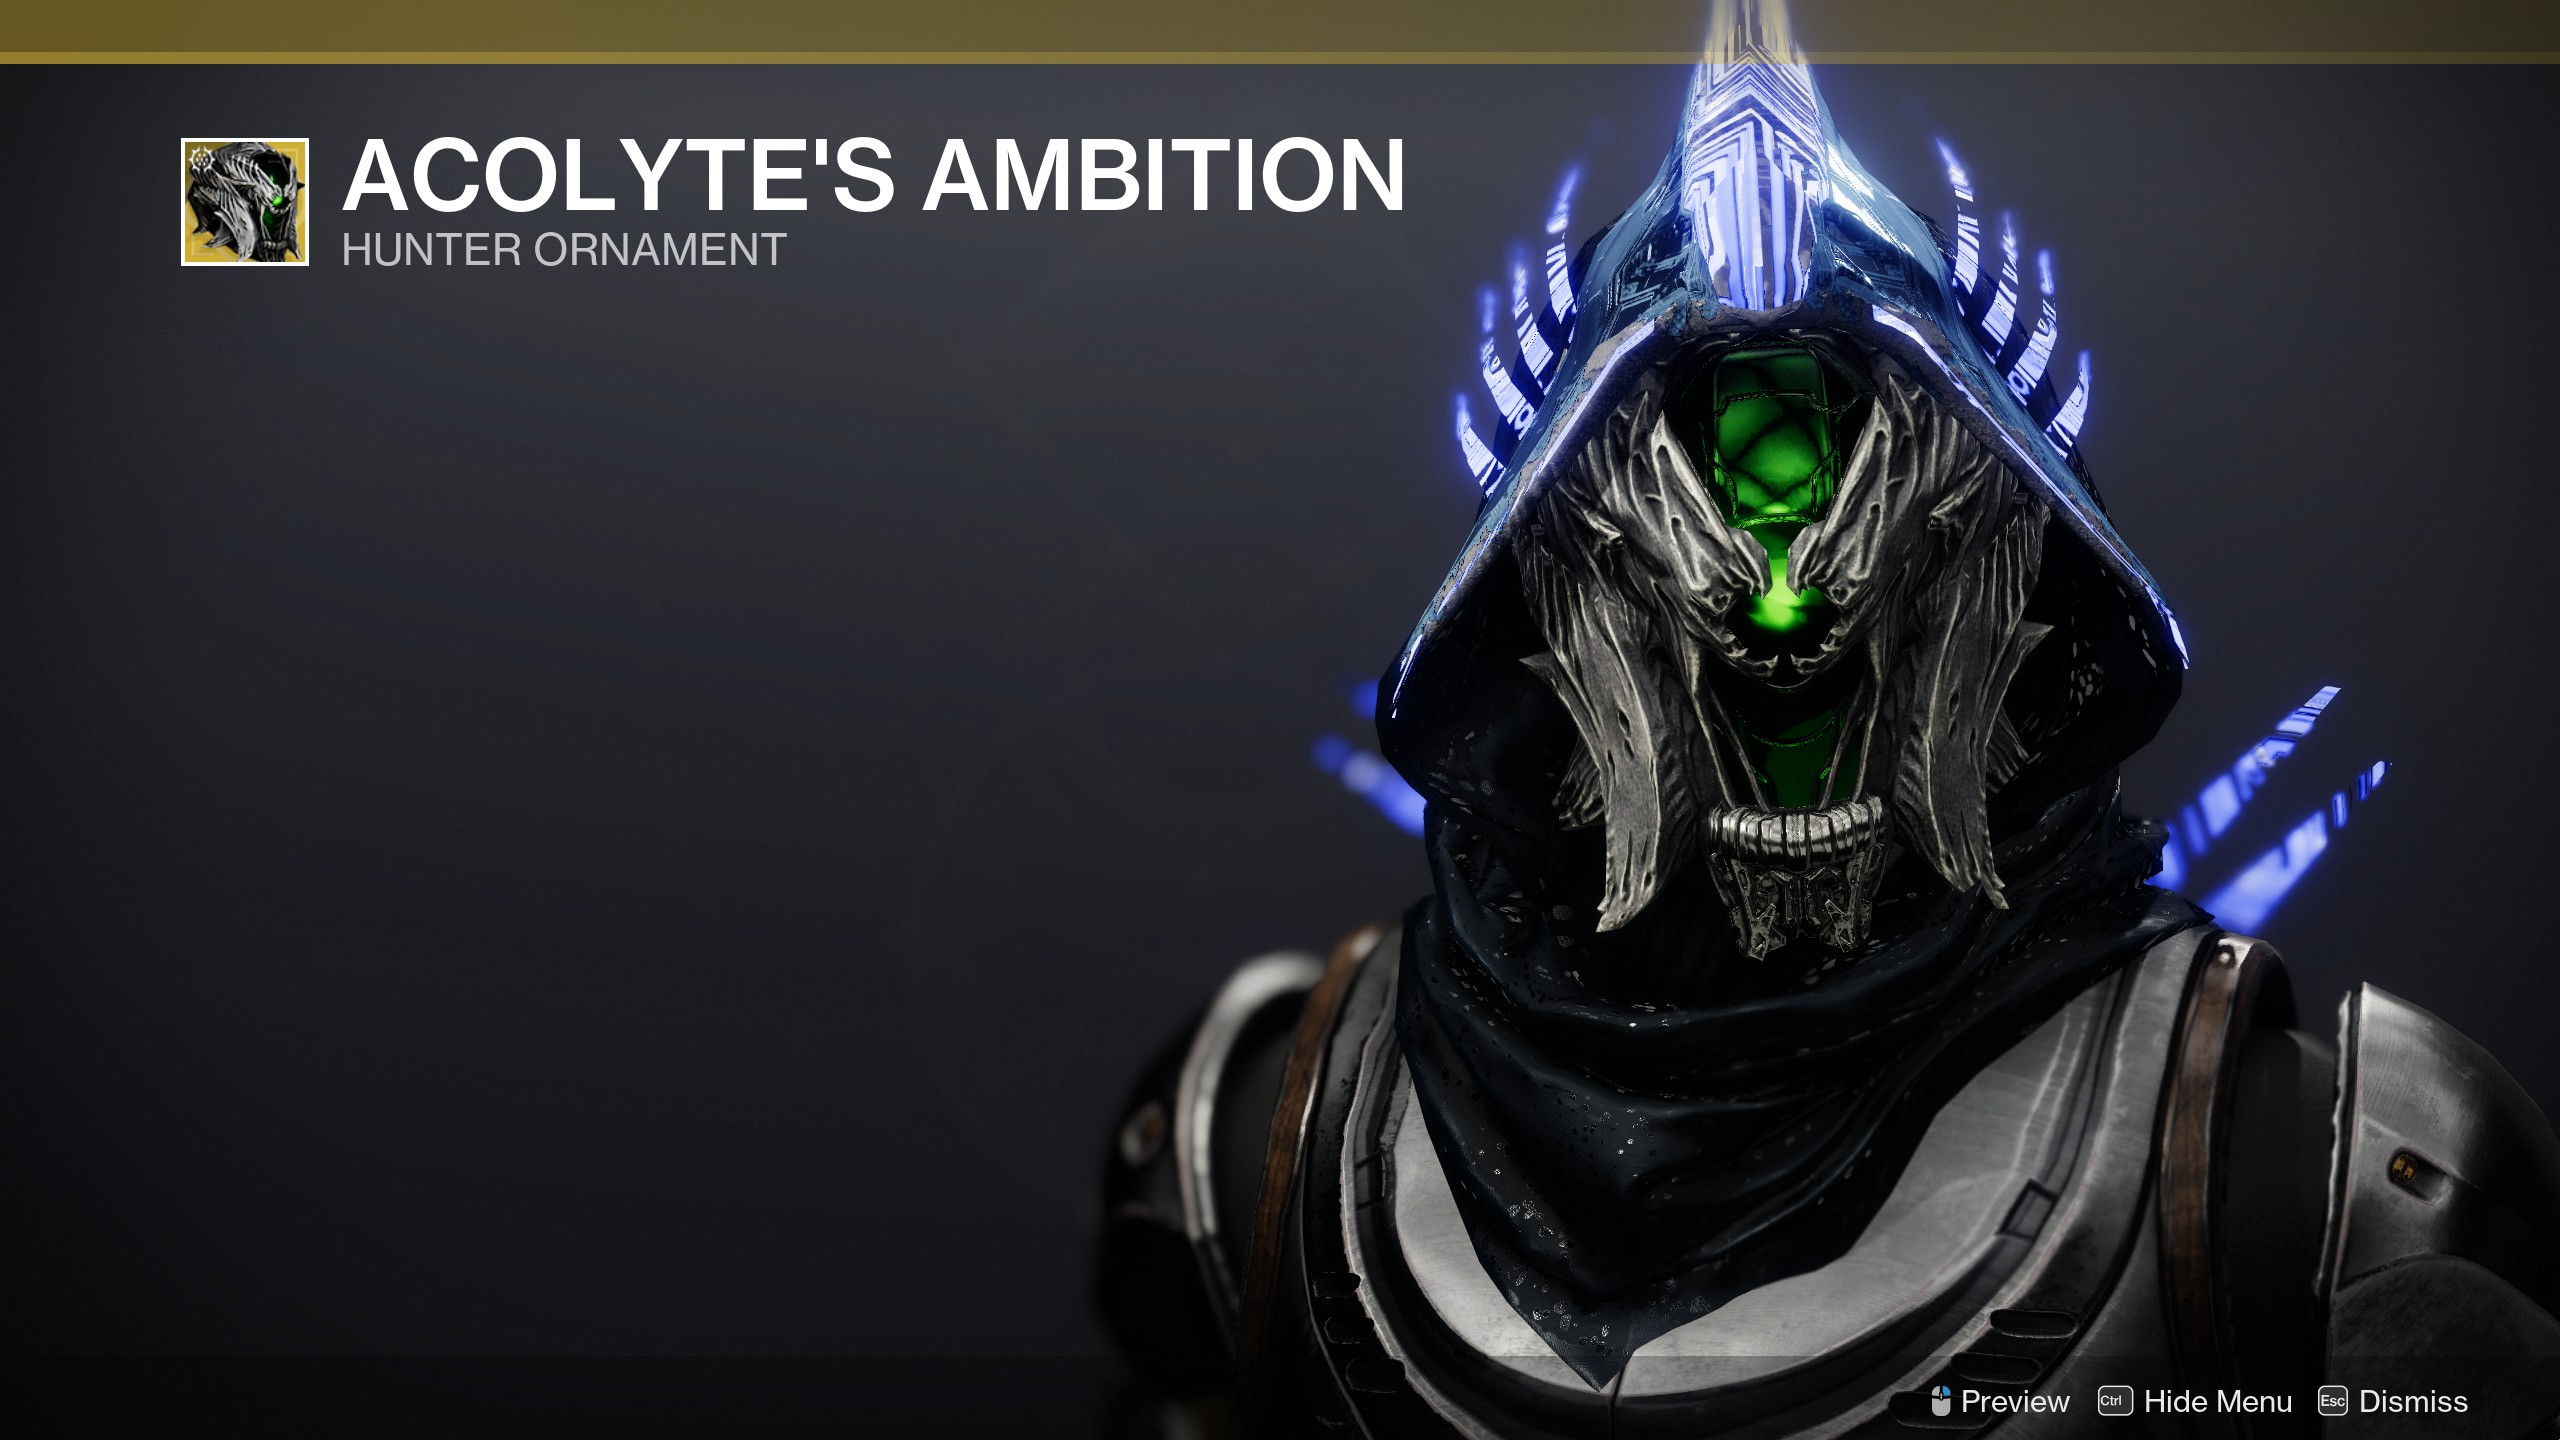 Destiny 2 Acolyte's Ambition ornament